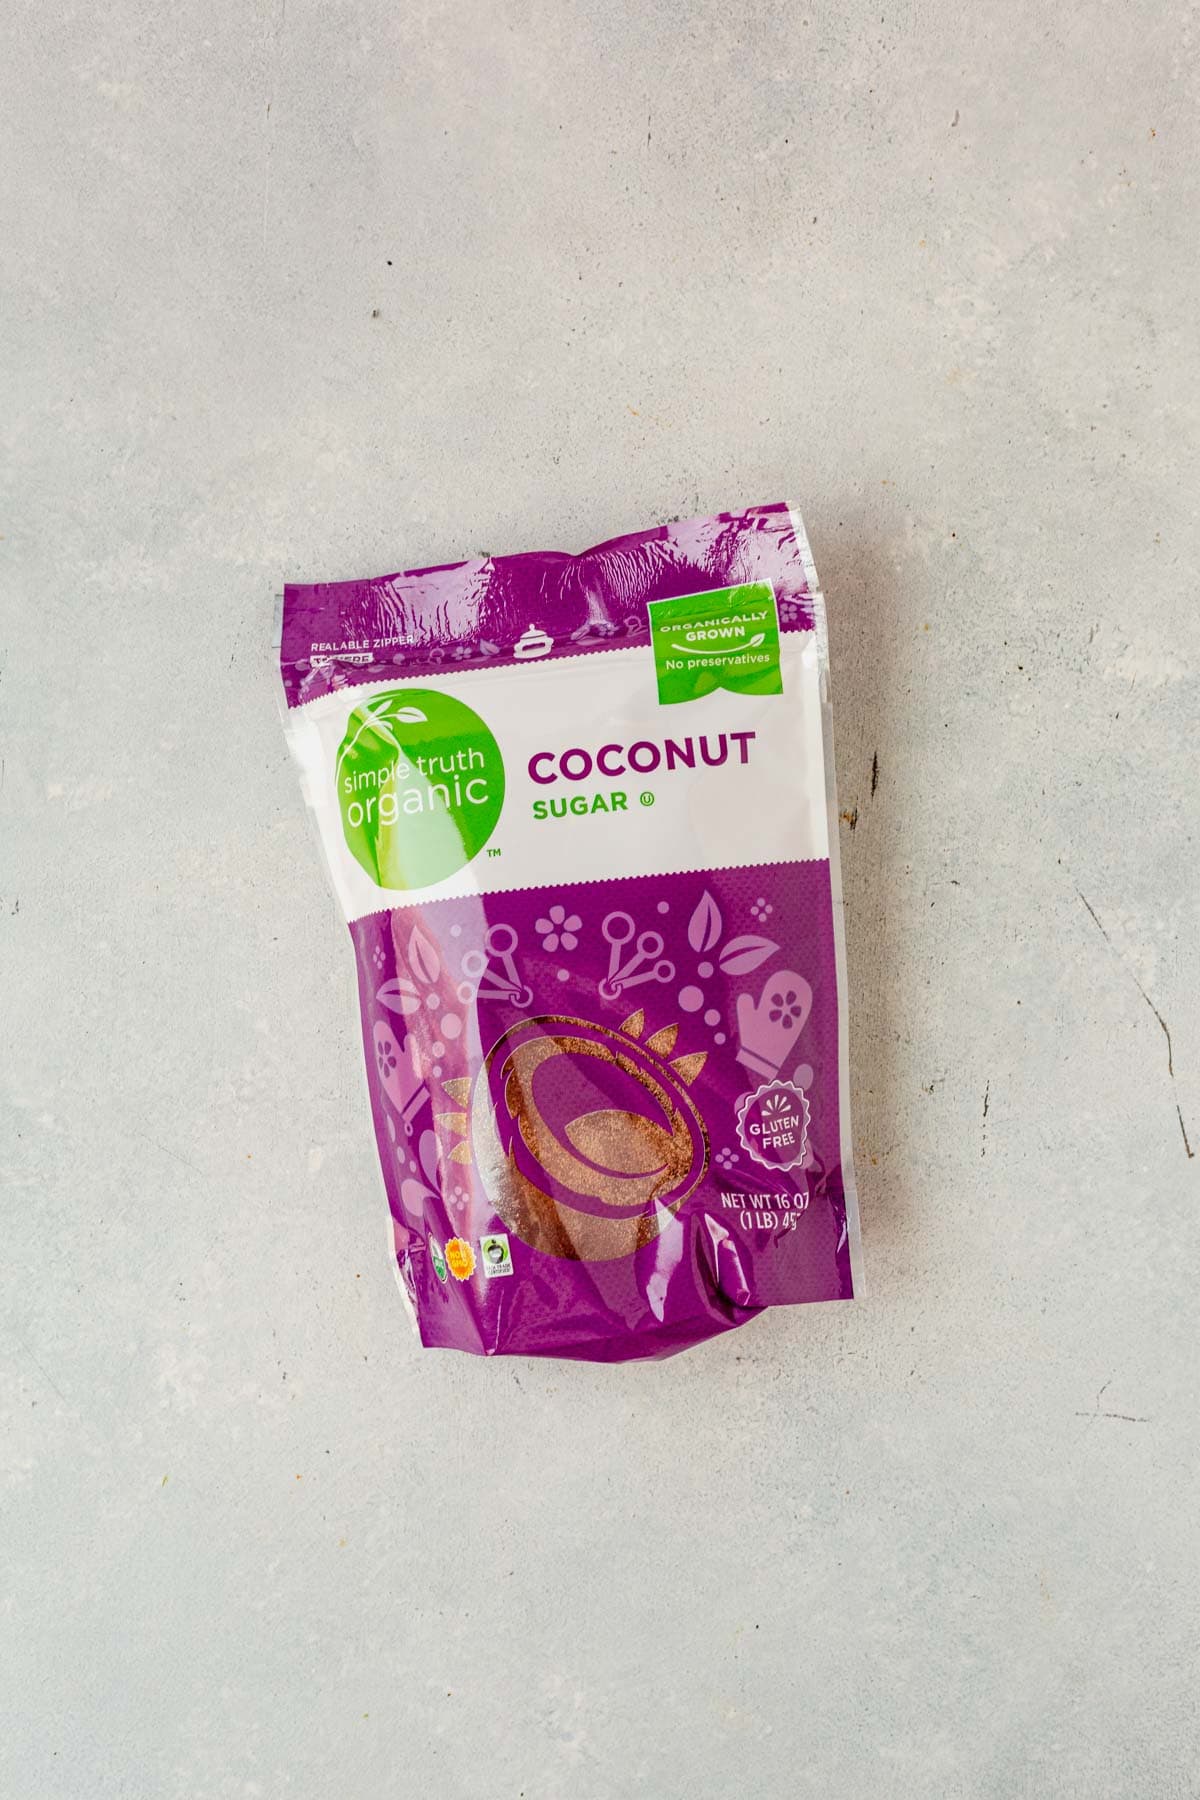 a bag of coconut sugar on a countertop